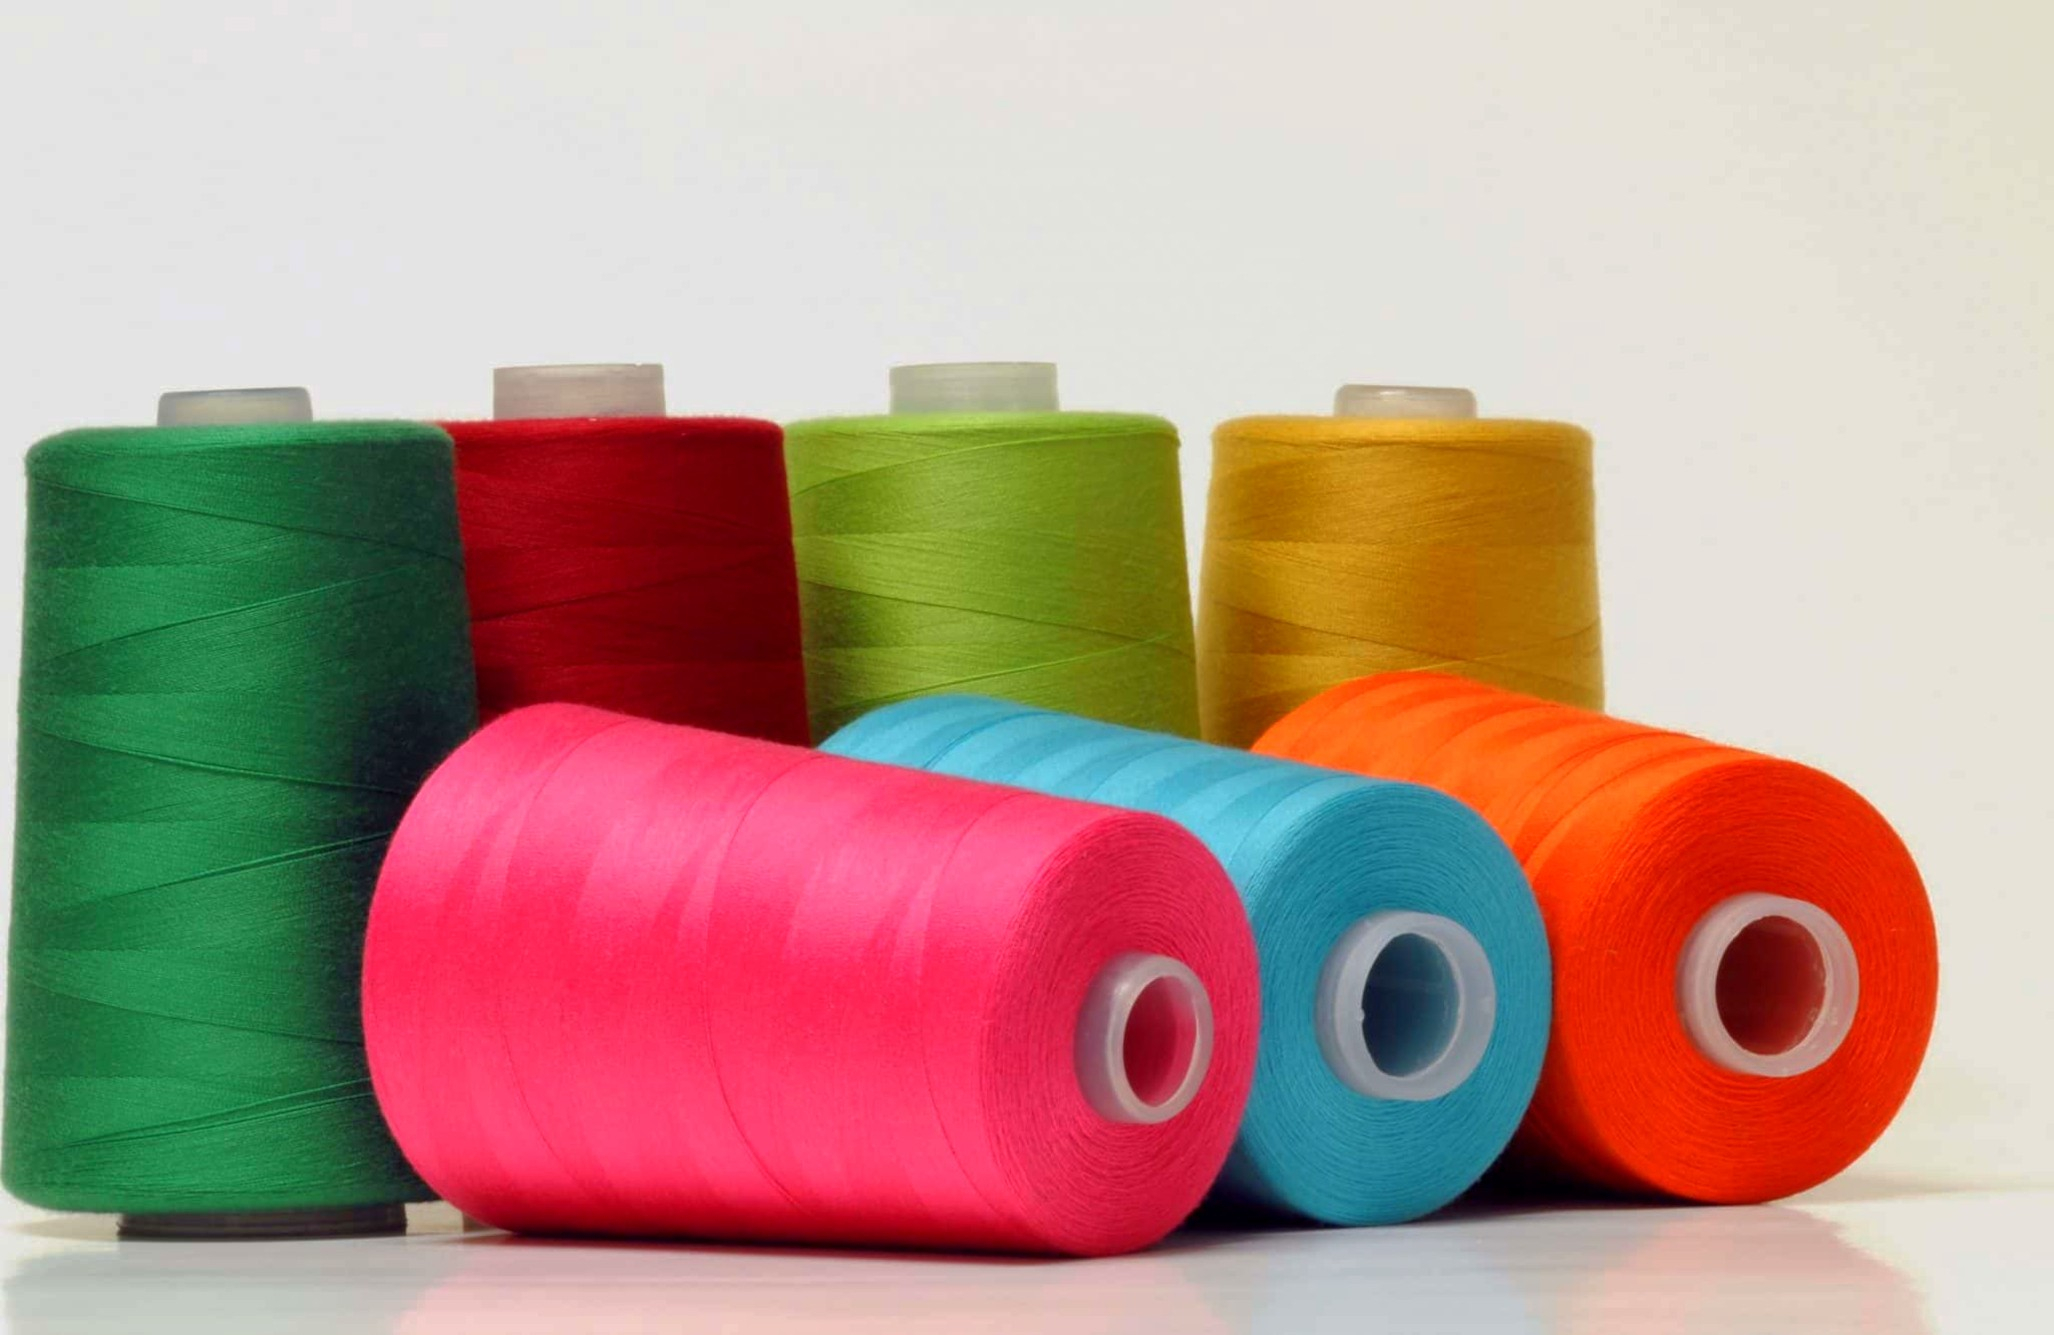 Кусок нитки. Полиэфирное волокно блузка. Packing Polyester Textured Yarn 4400dtex. Пряжа текстиль кожгалантерея. Thread colourful Polyester Yarn.